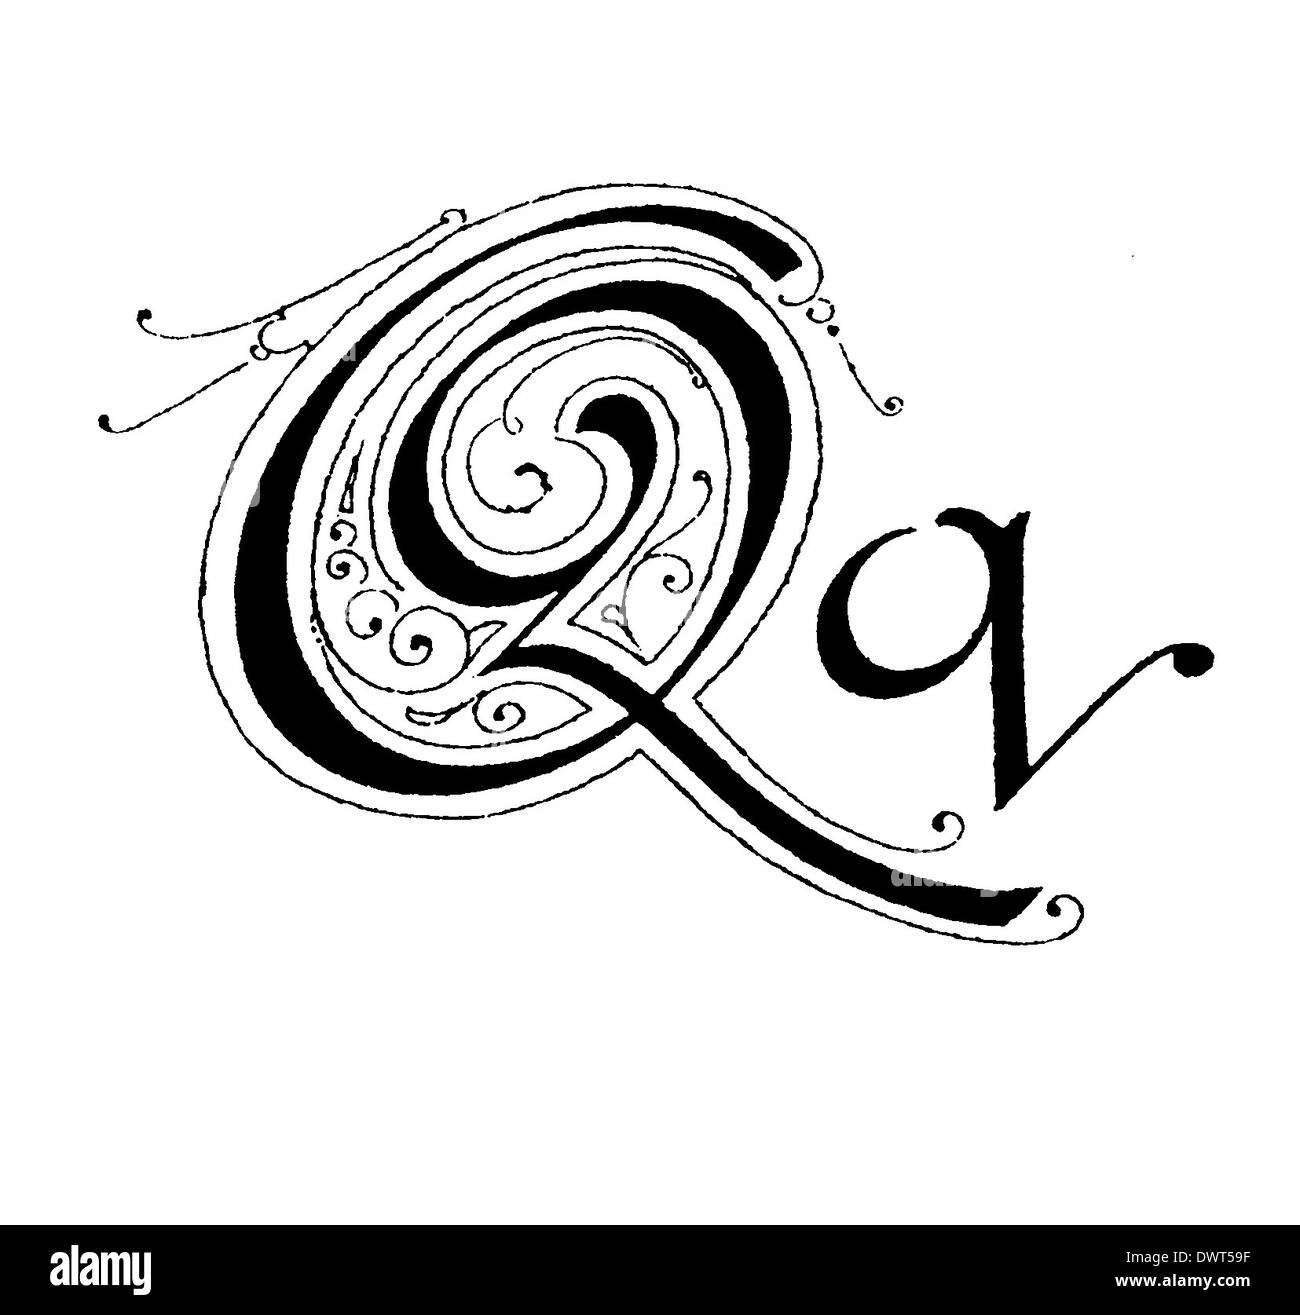 Alphabetic character, letter Q Stock Photo